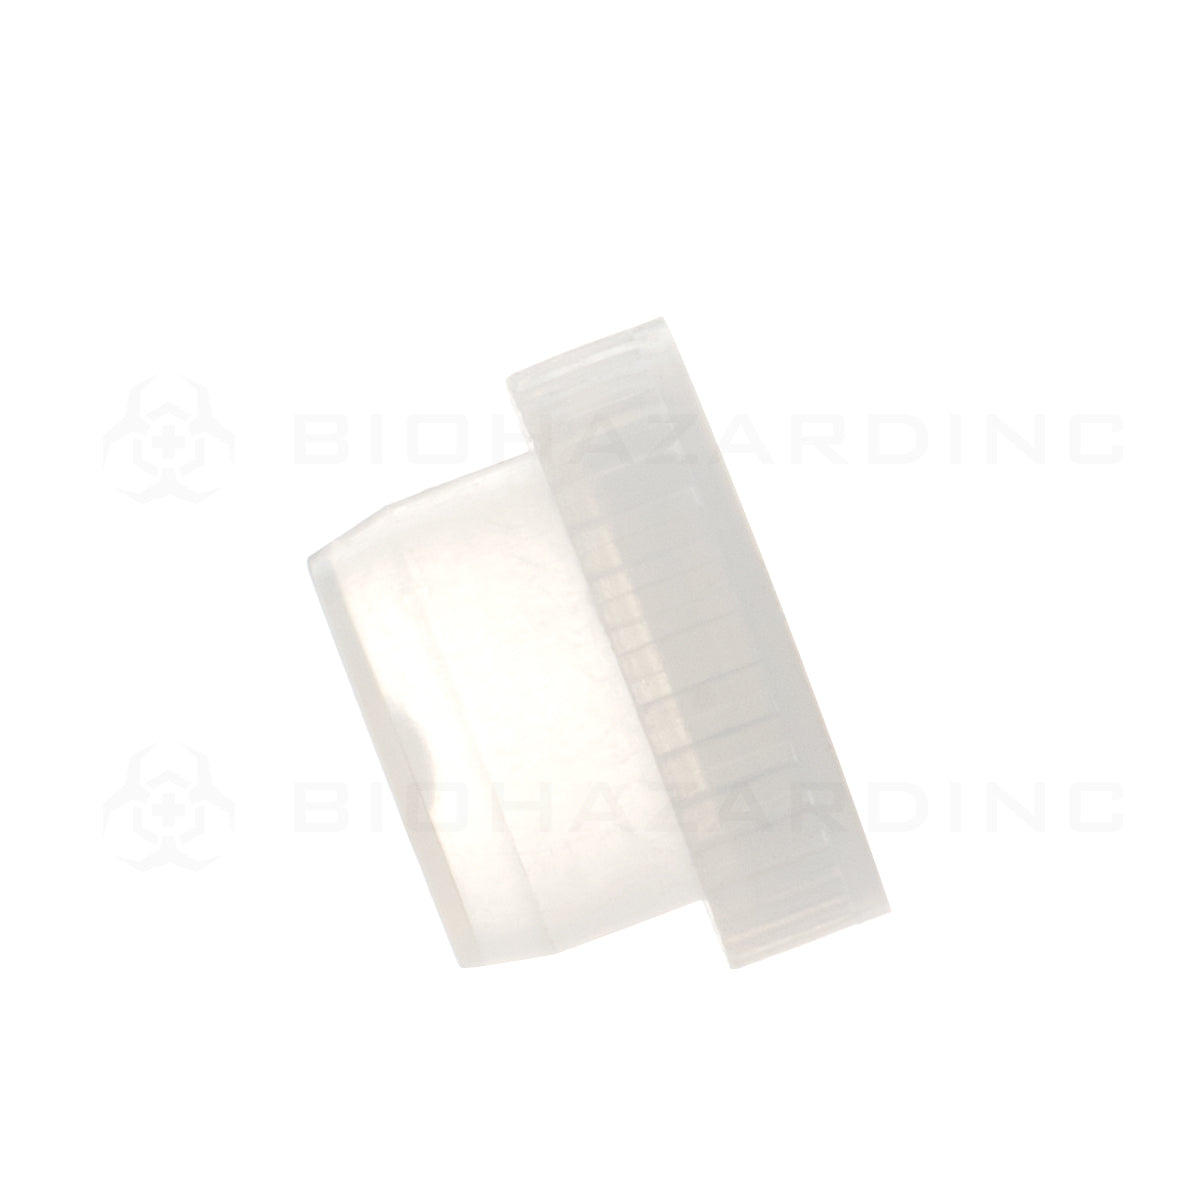 Plastic Cap | Plastic Stopper | 12mm - Clear Cap Biohazard Inc   